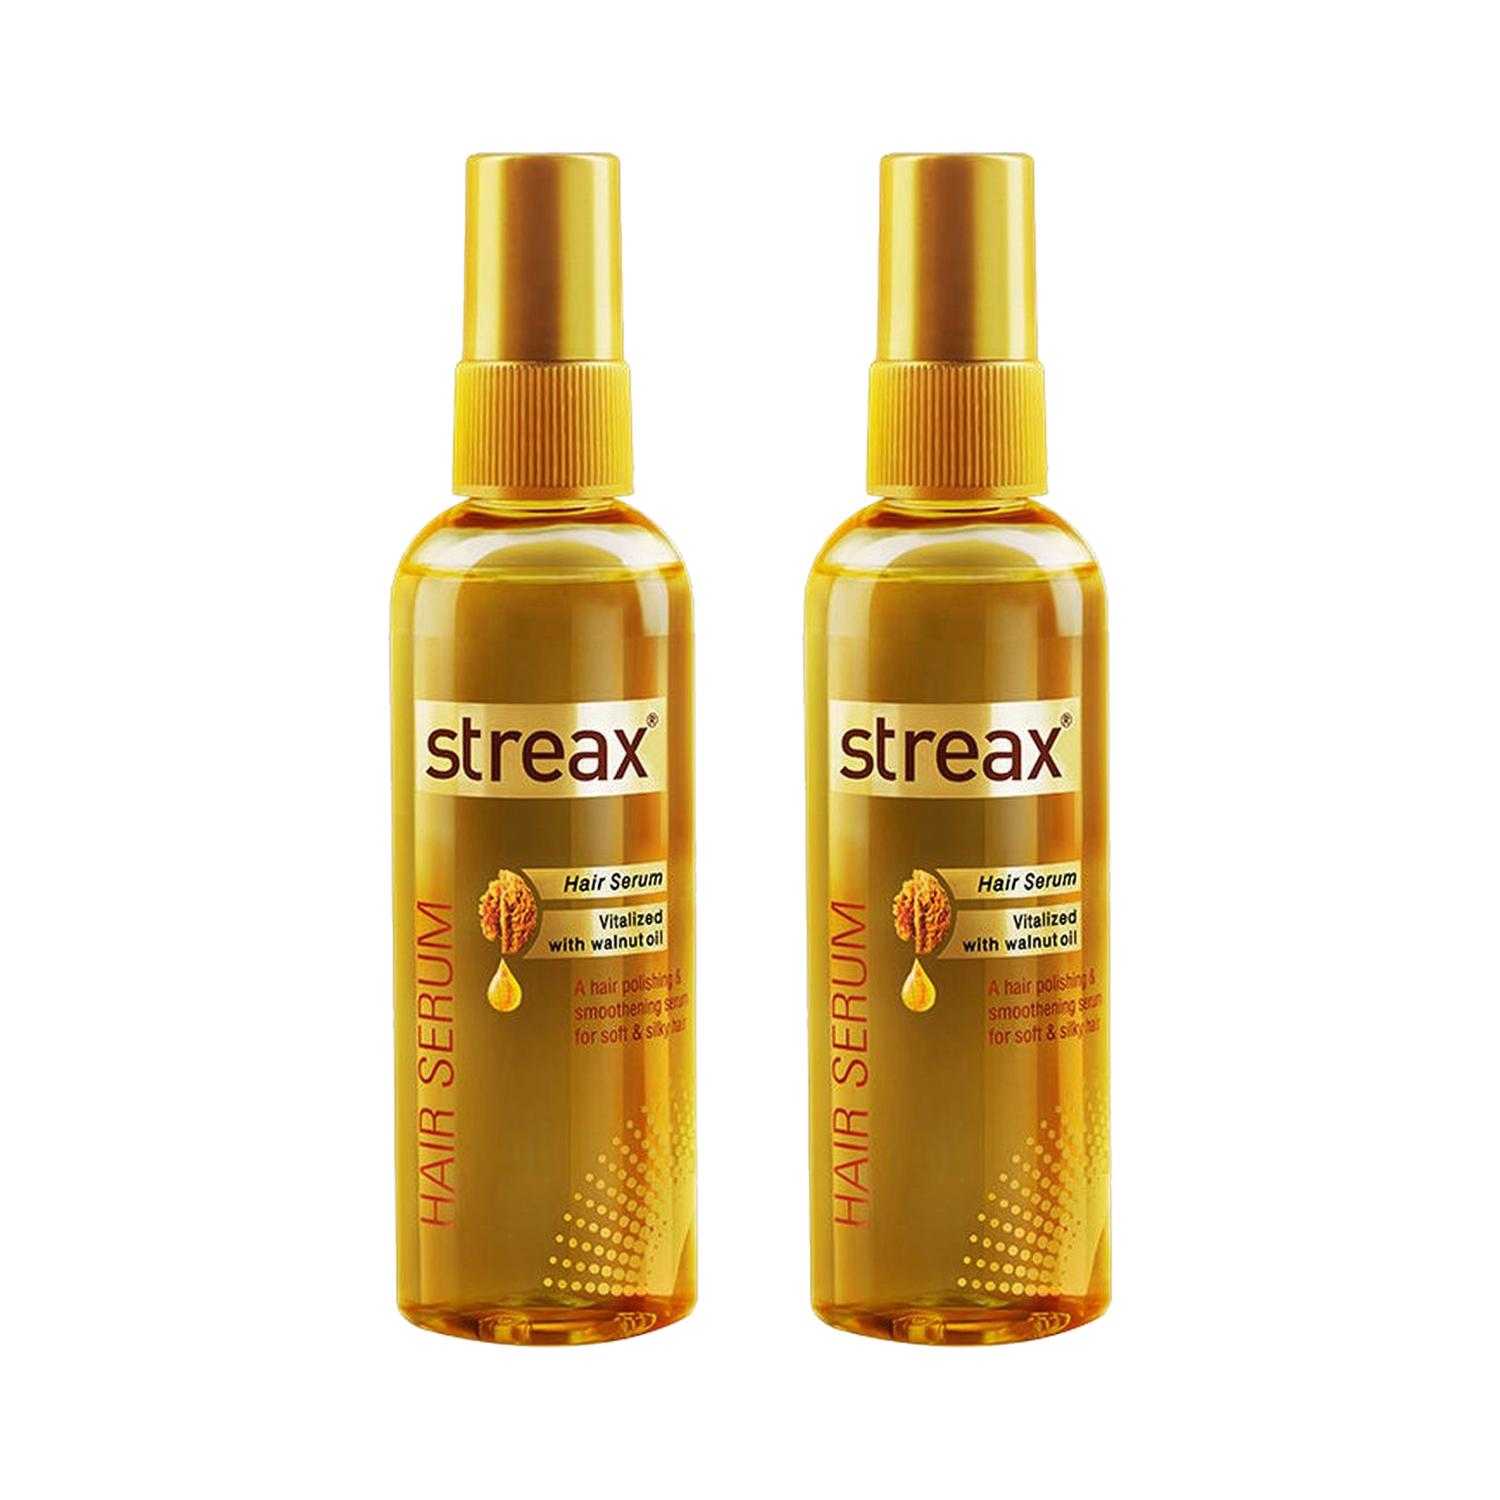 Streax | Streax Hair Serum vitalised with Walnut Oil (45ml) - (Pack of 2) Combo